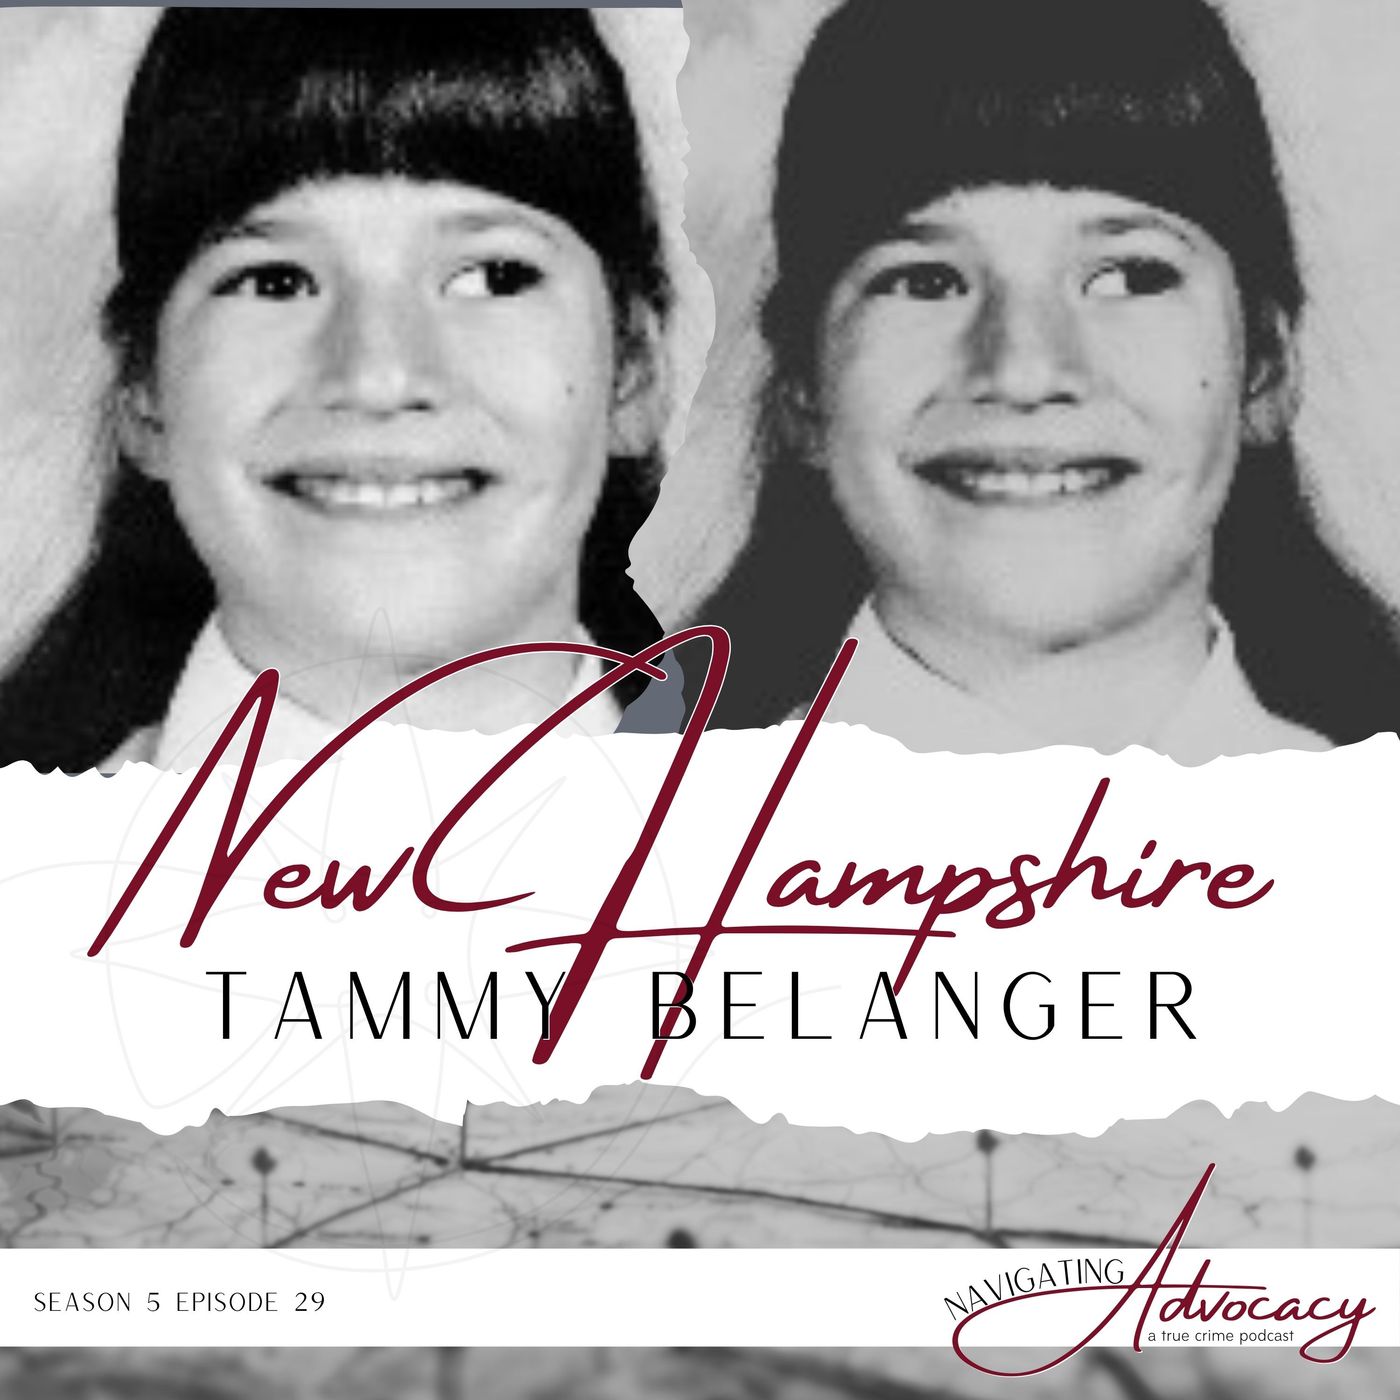 New Hampshire : Tammy Belanger